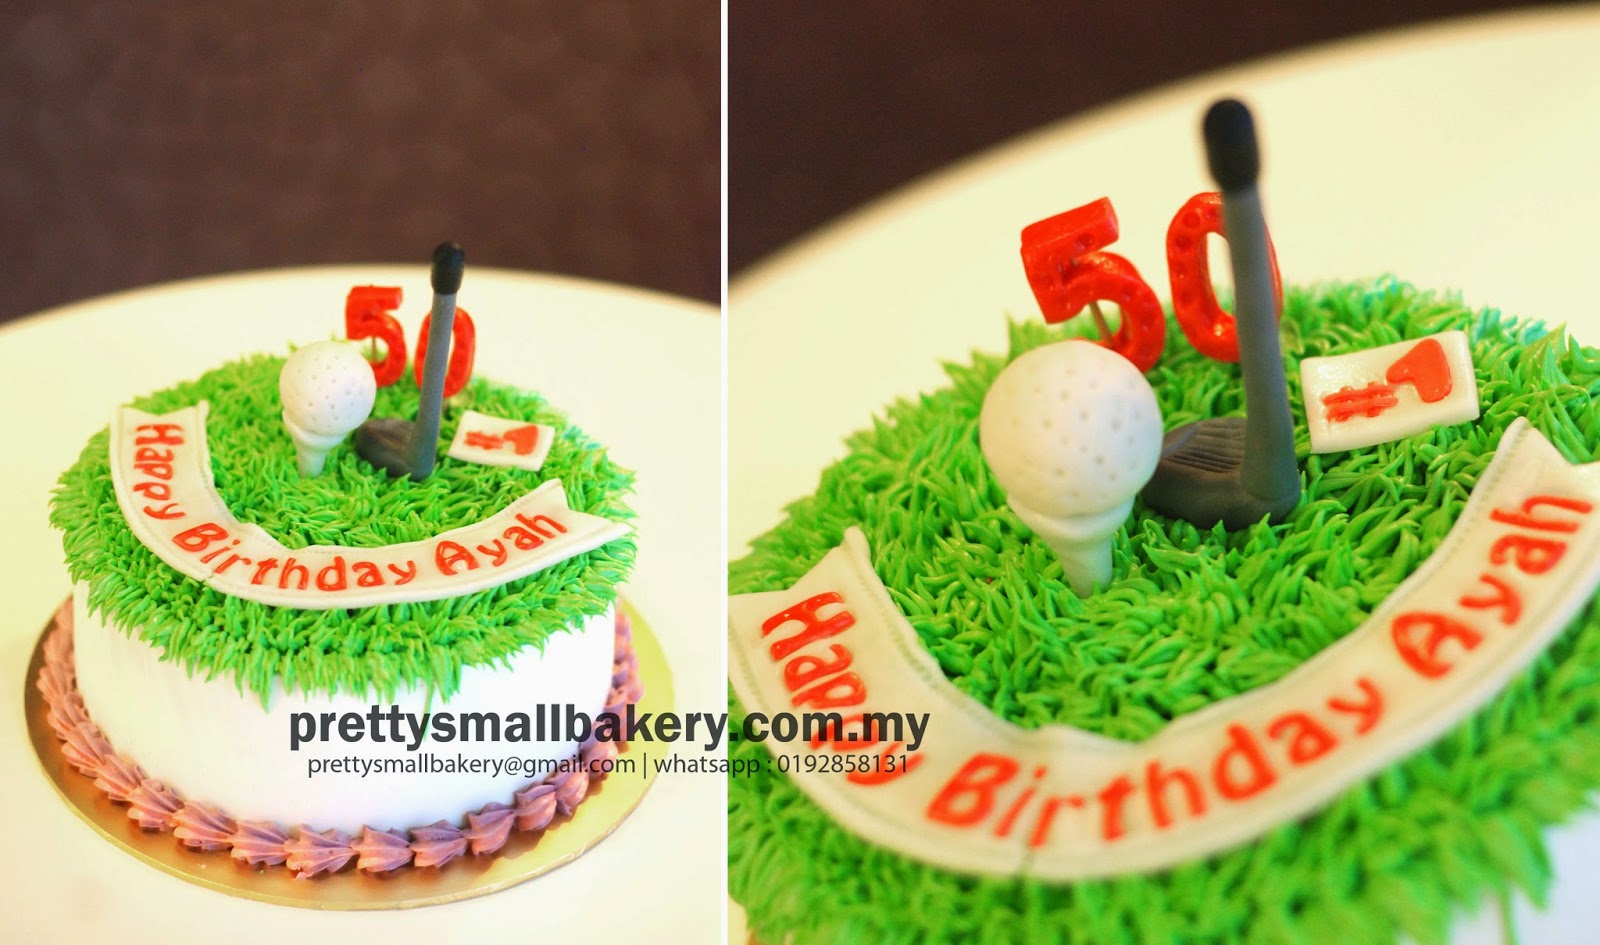 Kek harijadi untuk golfer - Prettysmallbakery